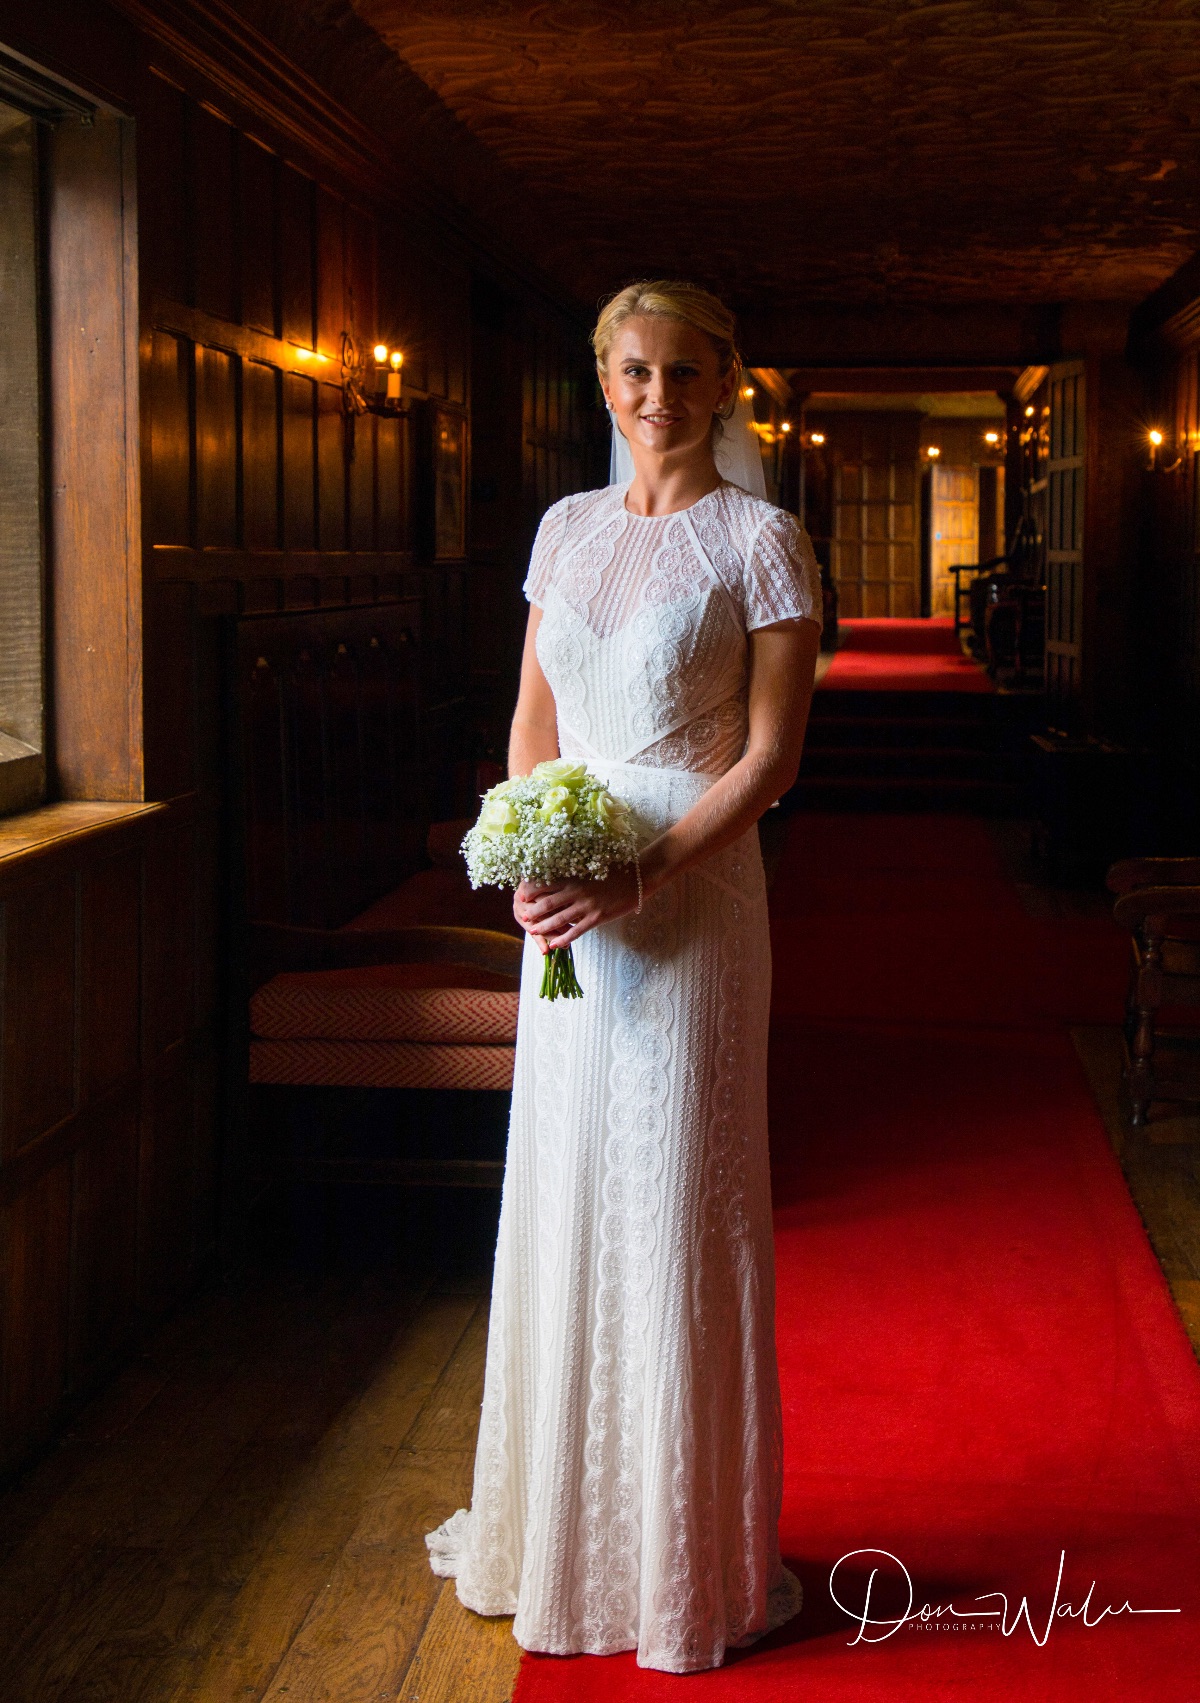 Don Wales Wedding Photography-Image-16